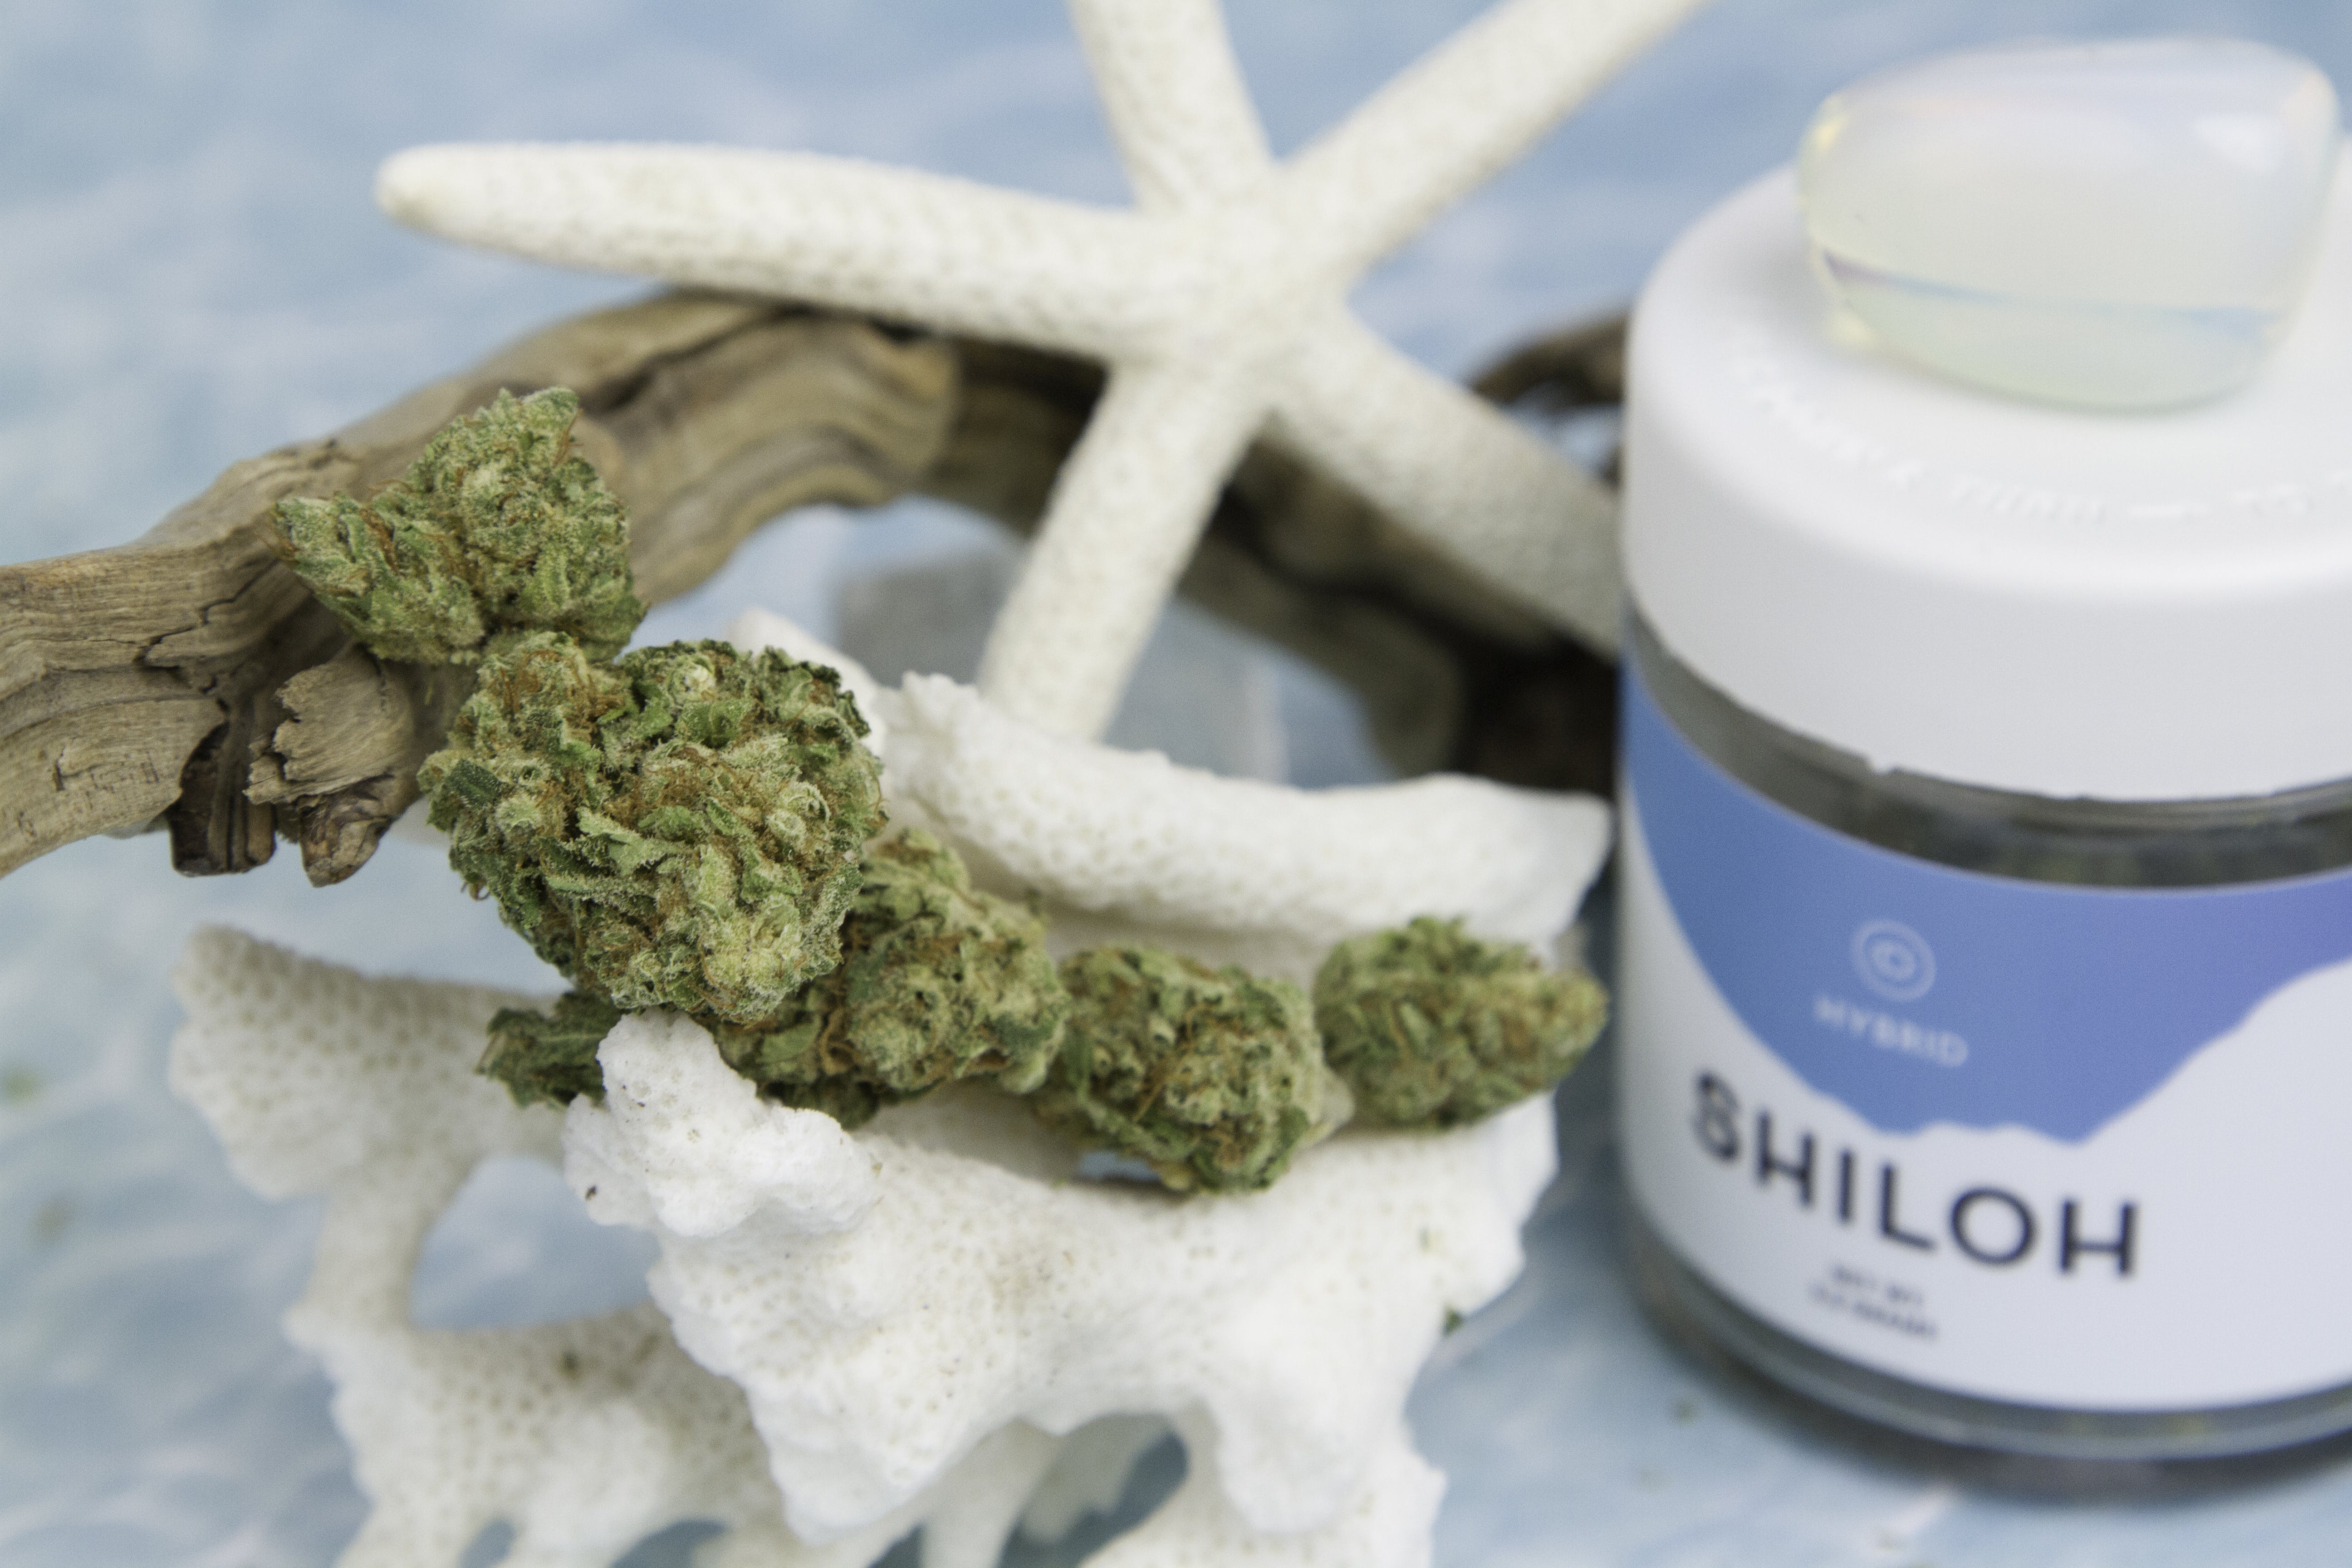 marijuana-dispensaries-22775-pacific-coast-highway-malibu-fire-og-from-shiloh-cannabis